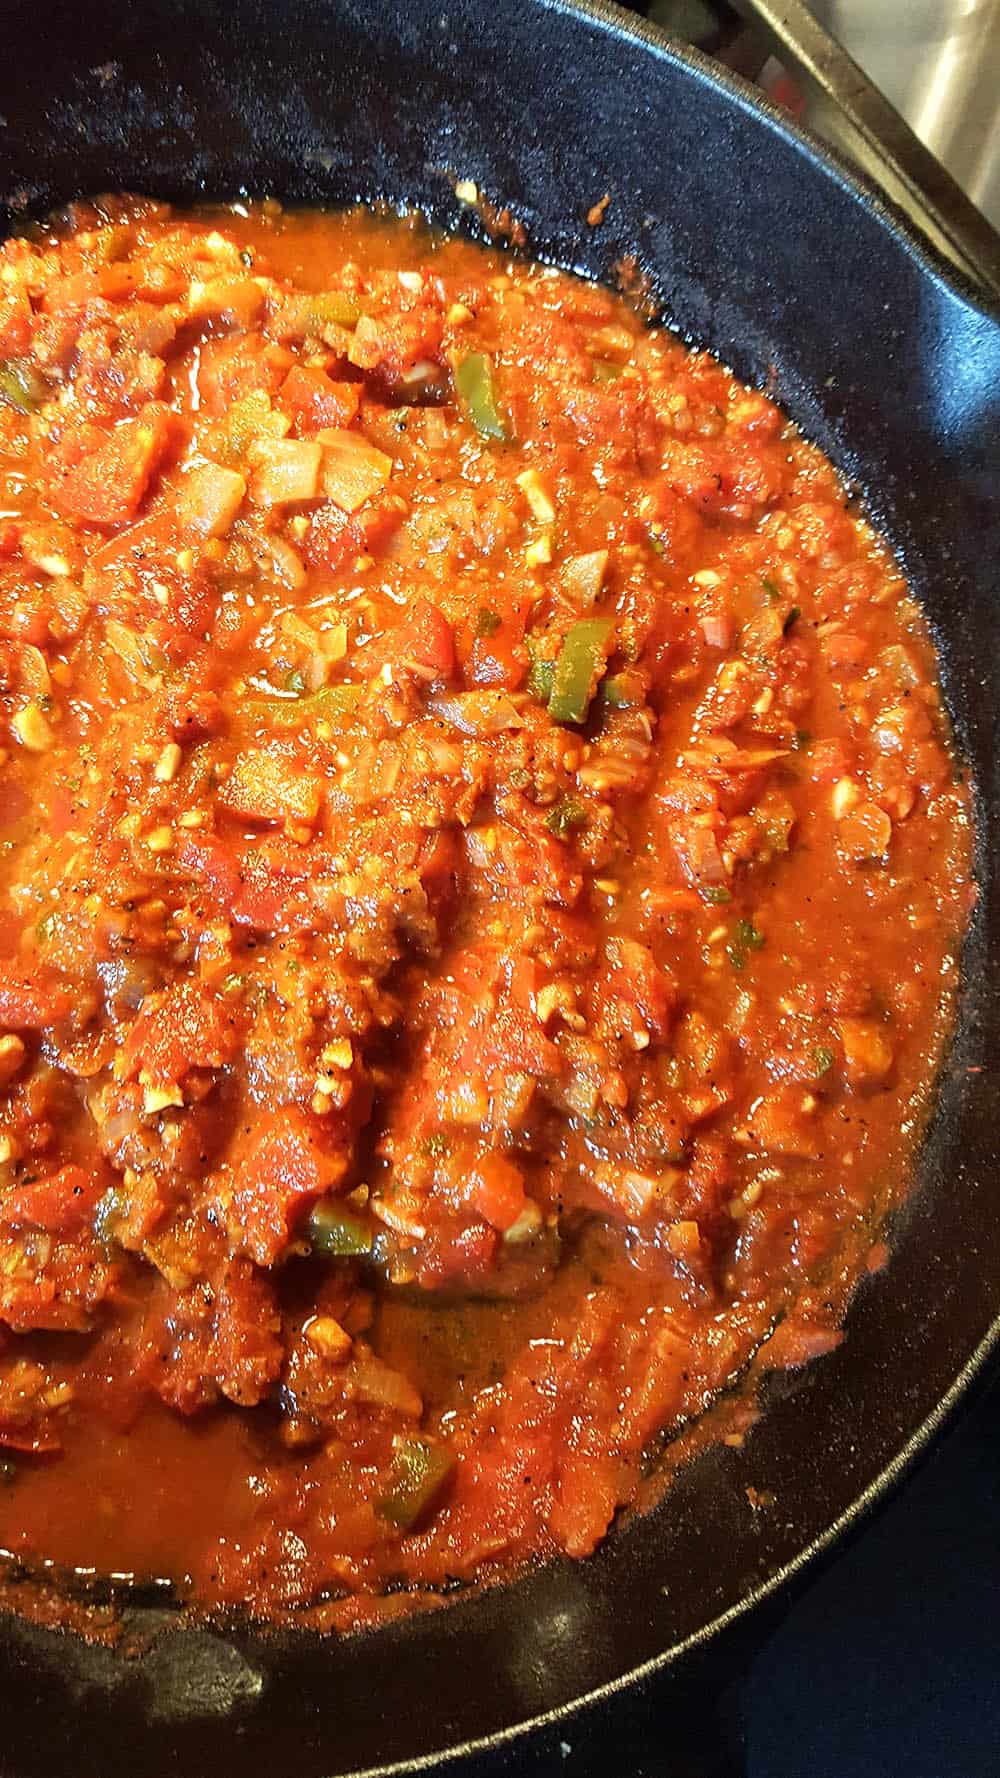 Simmering sauce for our Cajun Shrimp Pasta.